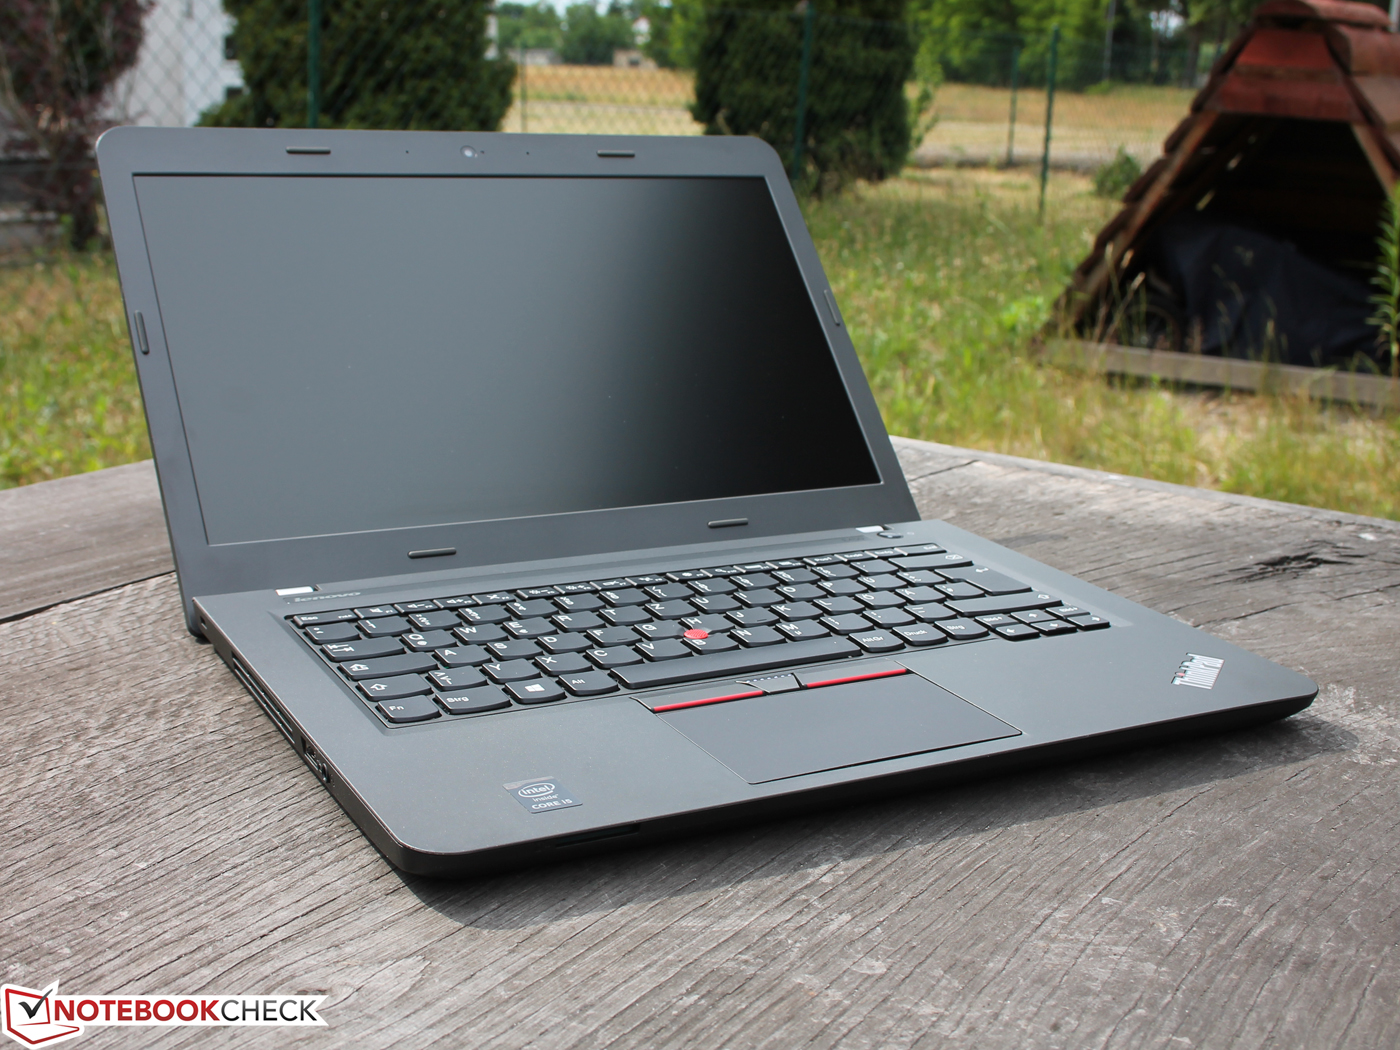 Lenovo ThinkPad E450 Notebook Review - NotebookCheck.net Reviews